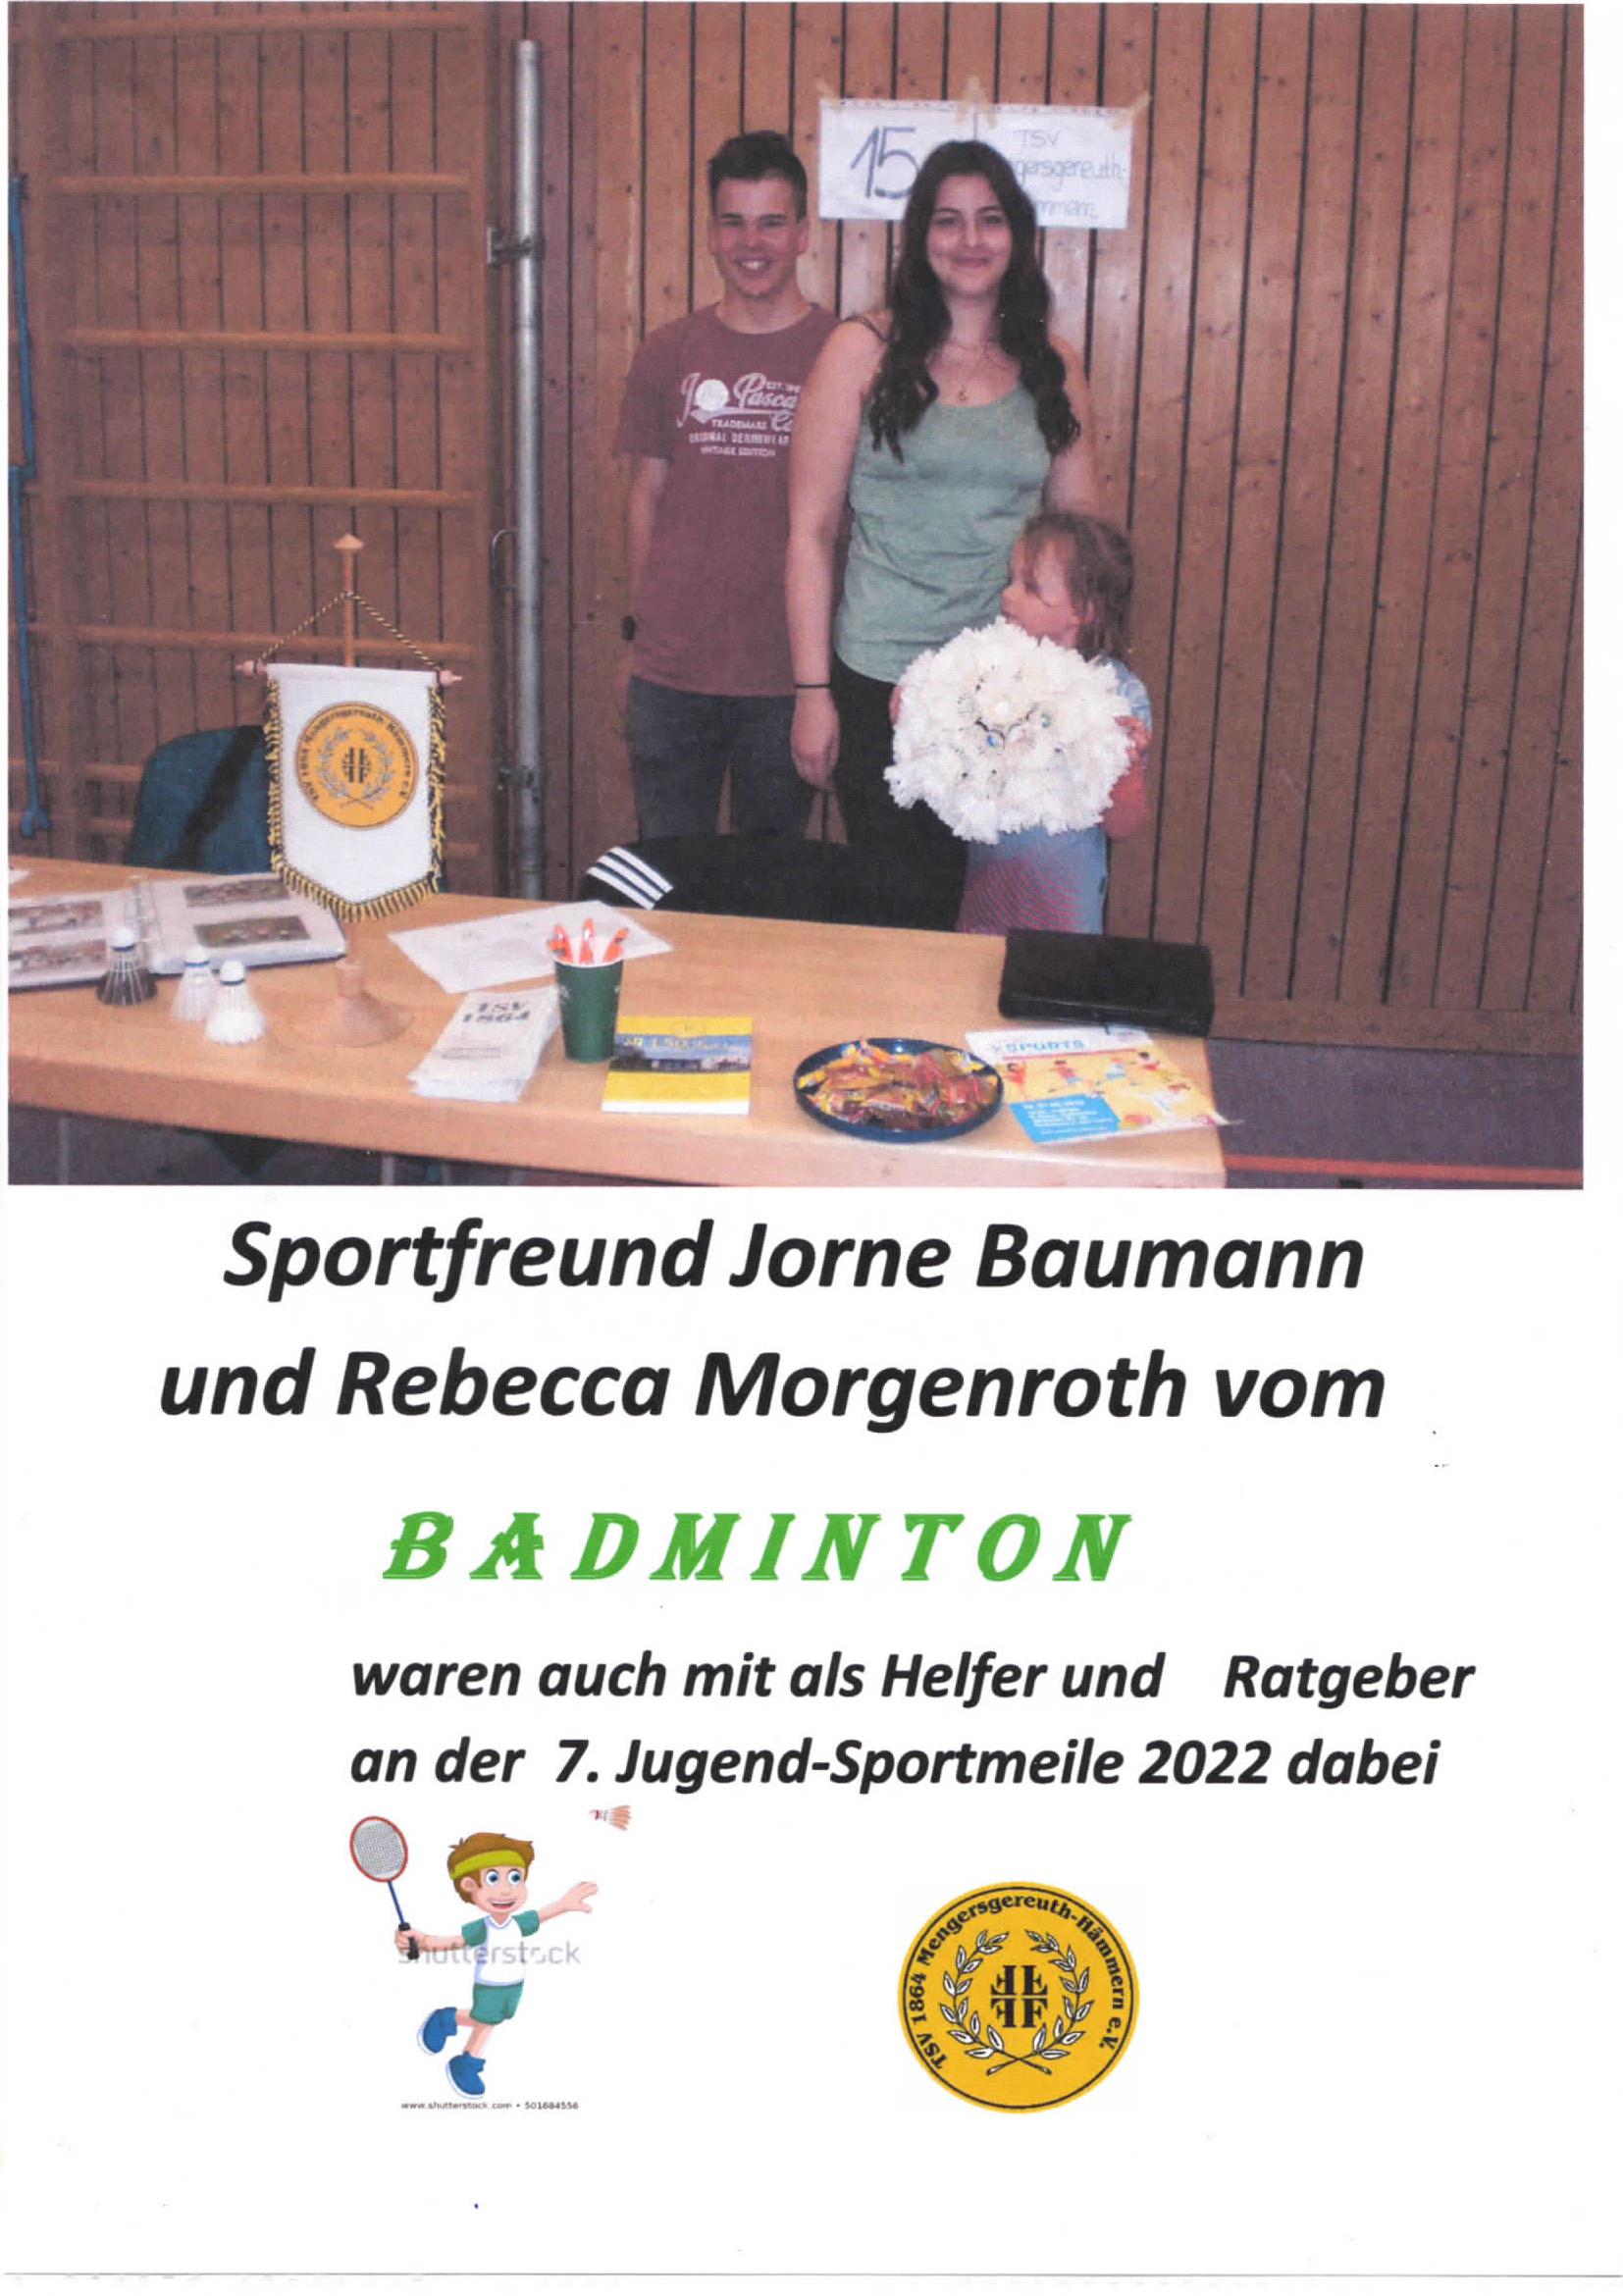 Sportmeile 2022 -Badminton